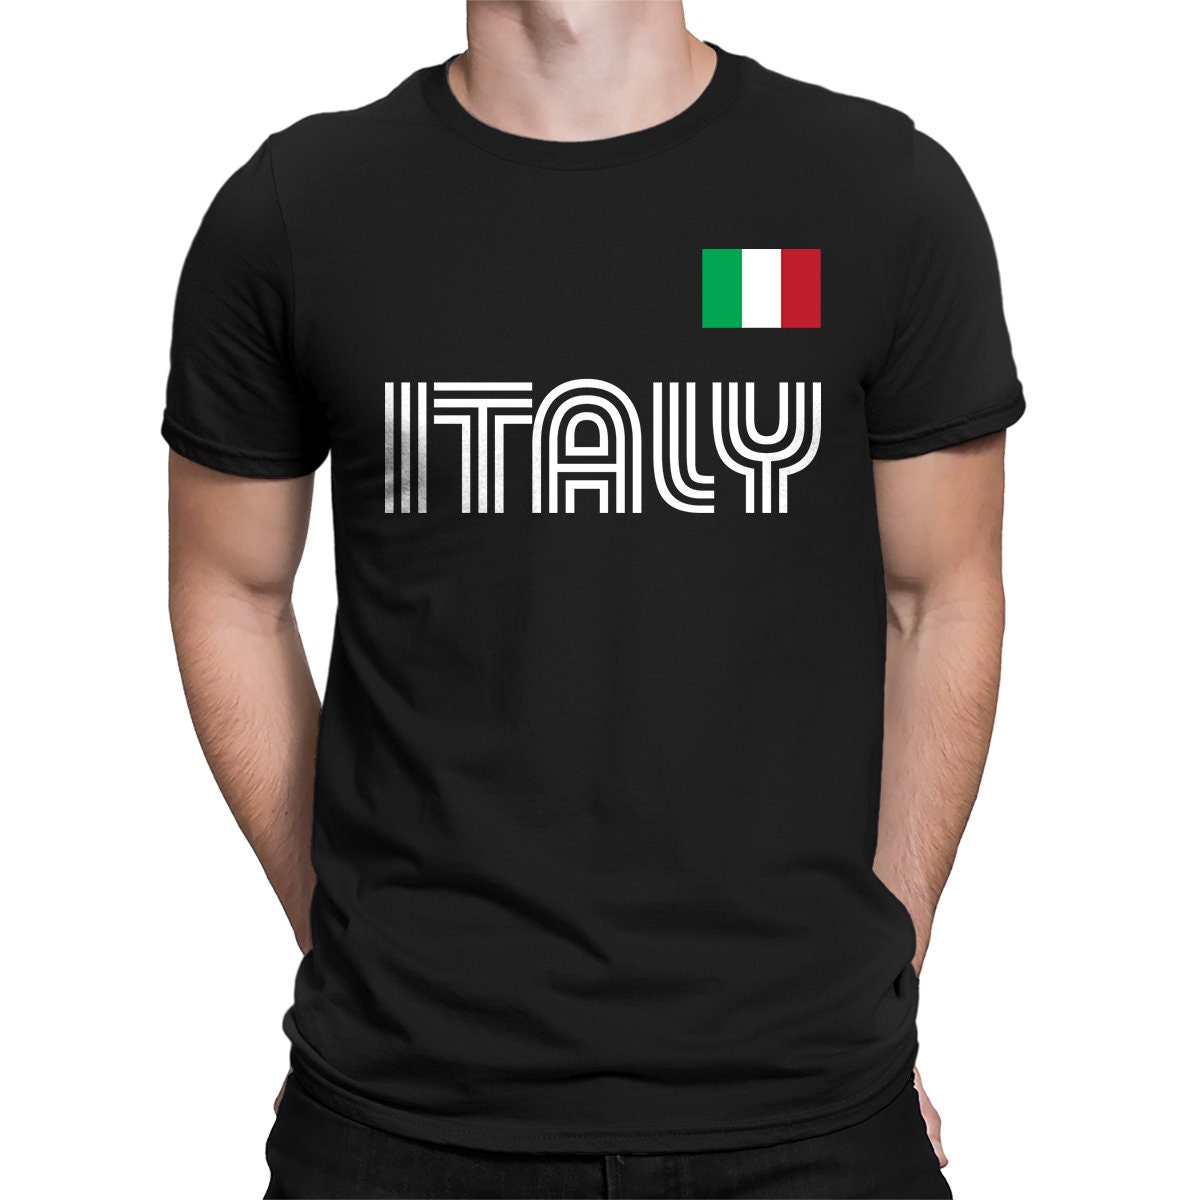 Italy Series 1 Country Pride Italian Republic Rome Milan Naples Turin Palermo Genoa Travel Explore Discover Experience Men's T-shirt ITA-01